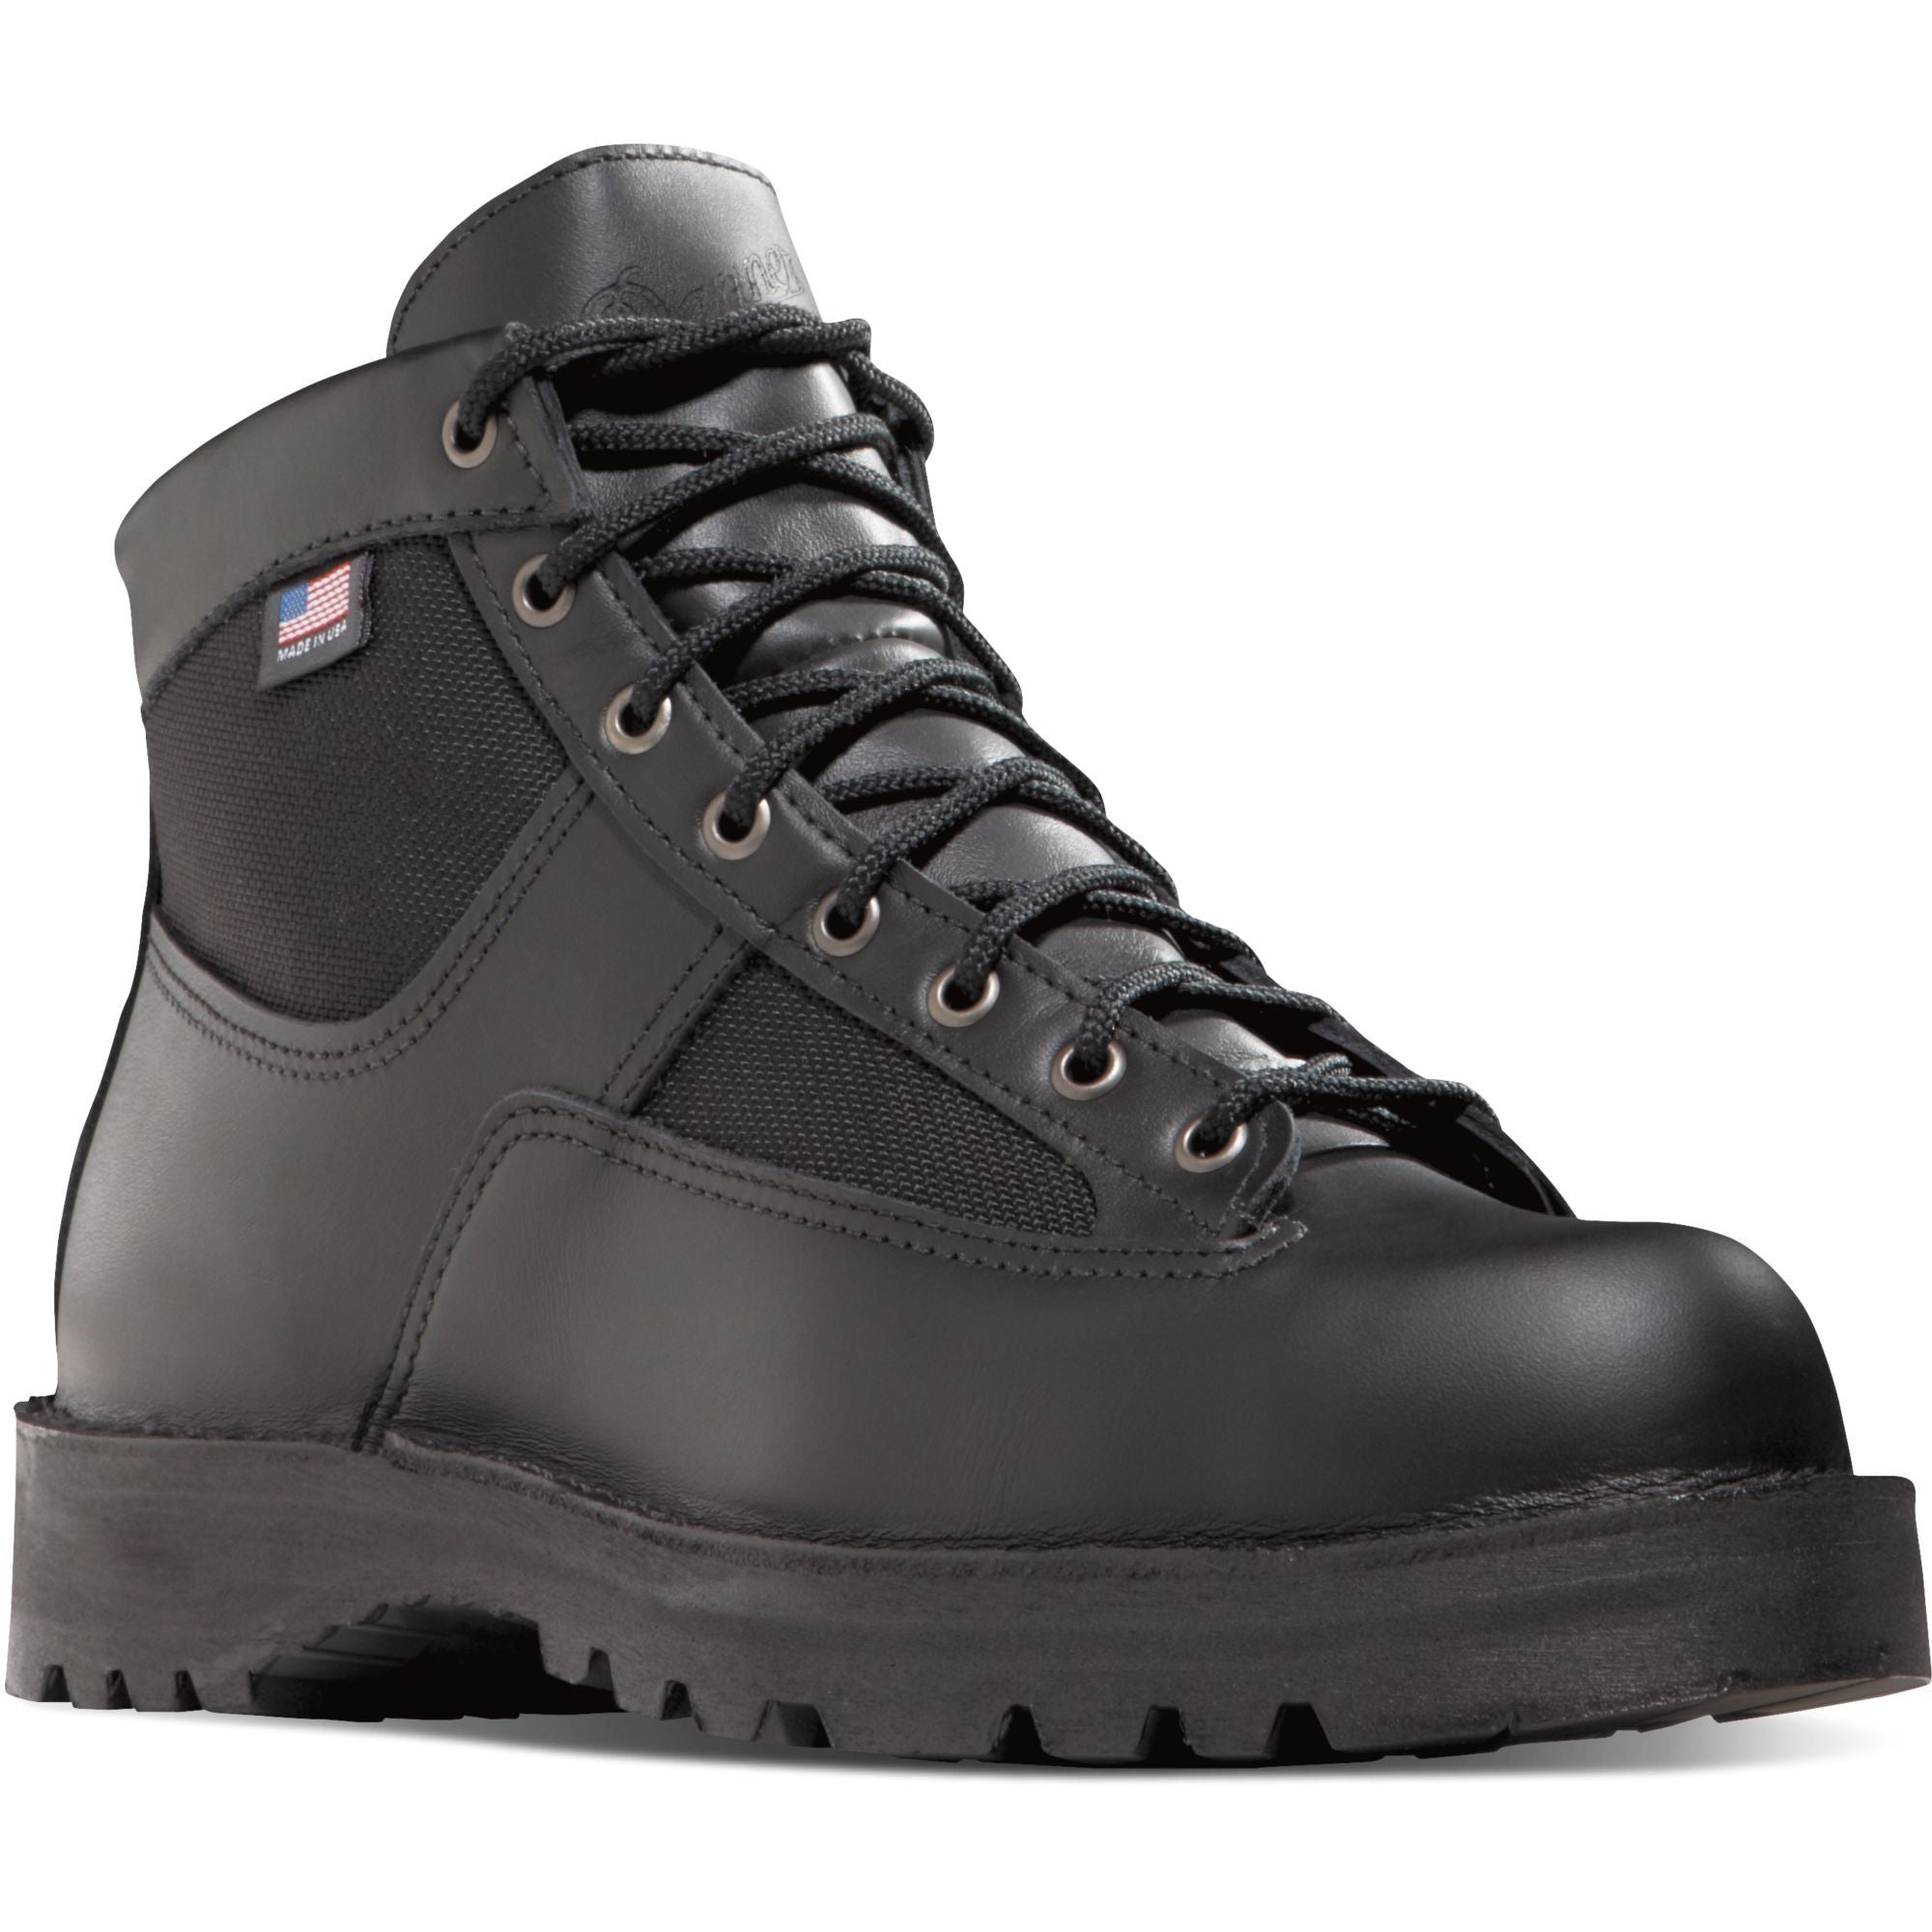 Danner Men's Patrol USA Made 6" Waterproof Duty Boot - Black - 25200 7 / Medium / Black - Overlook Boots